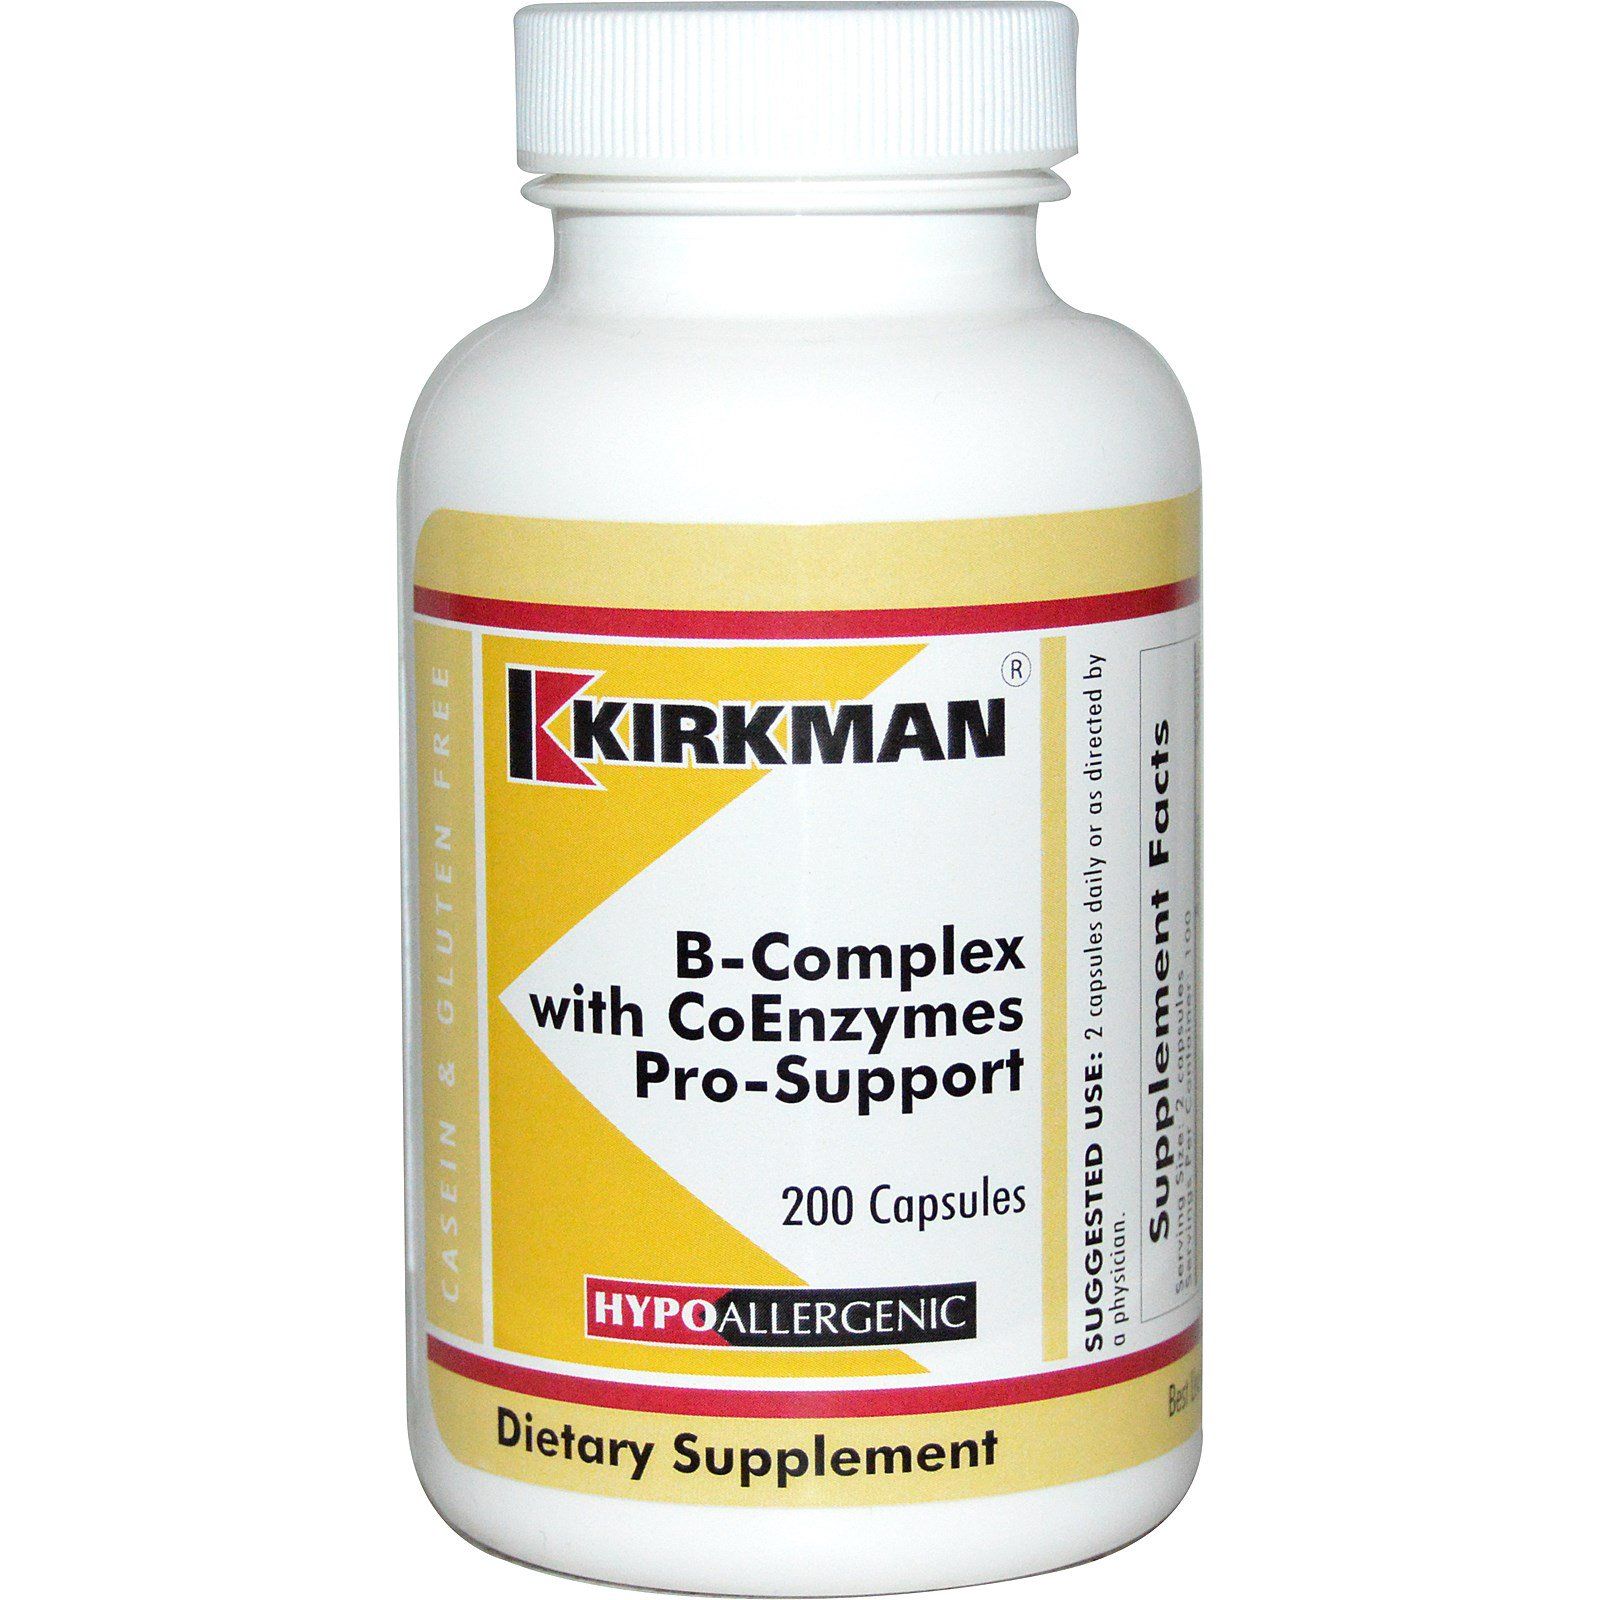 Витамины гр б. Kirkman витамины. Коэнзим комплекс витаминов в. Витамин б Коэнзимный комплекс. Комплекс витаминов группы б.